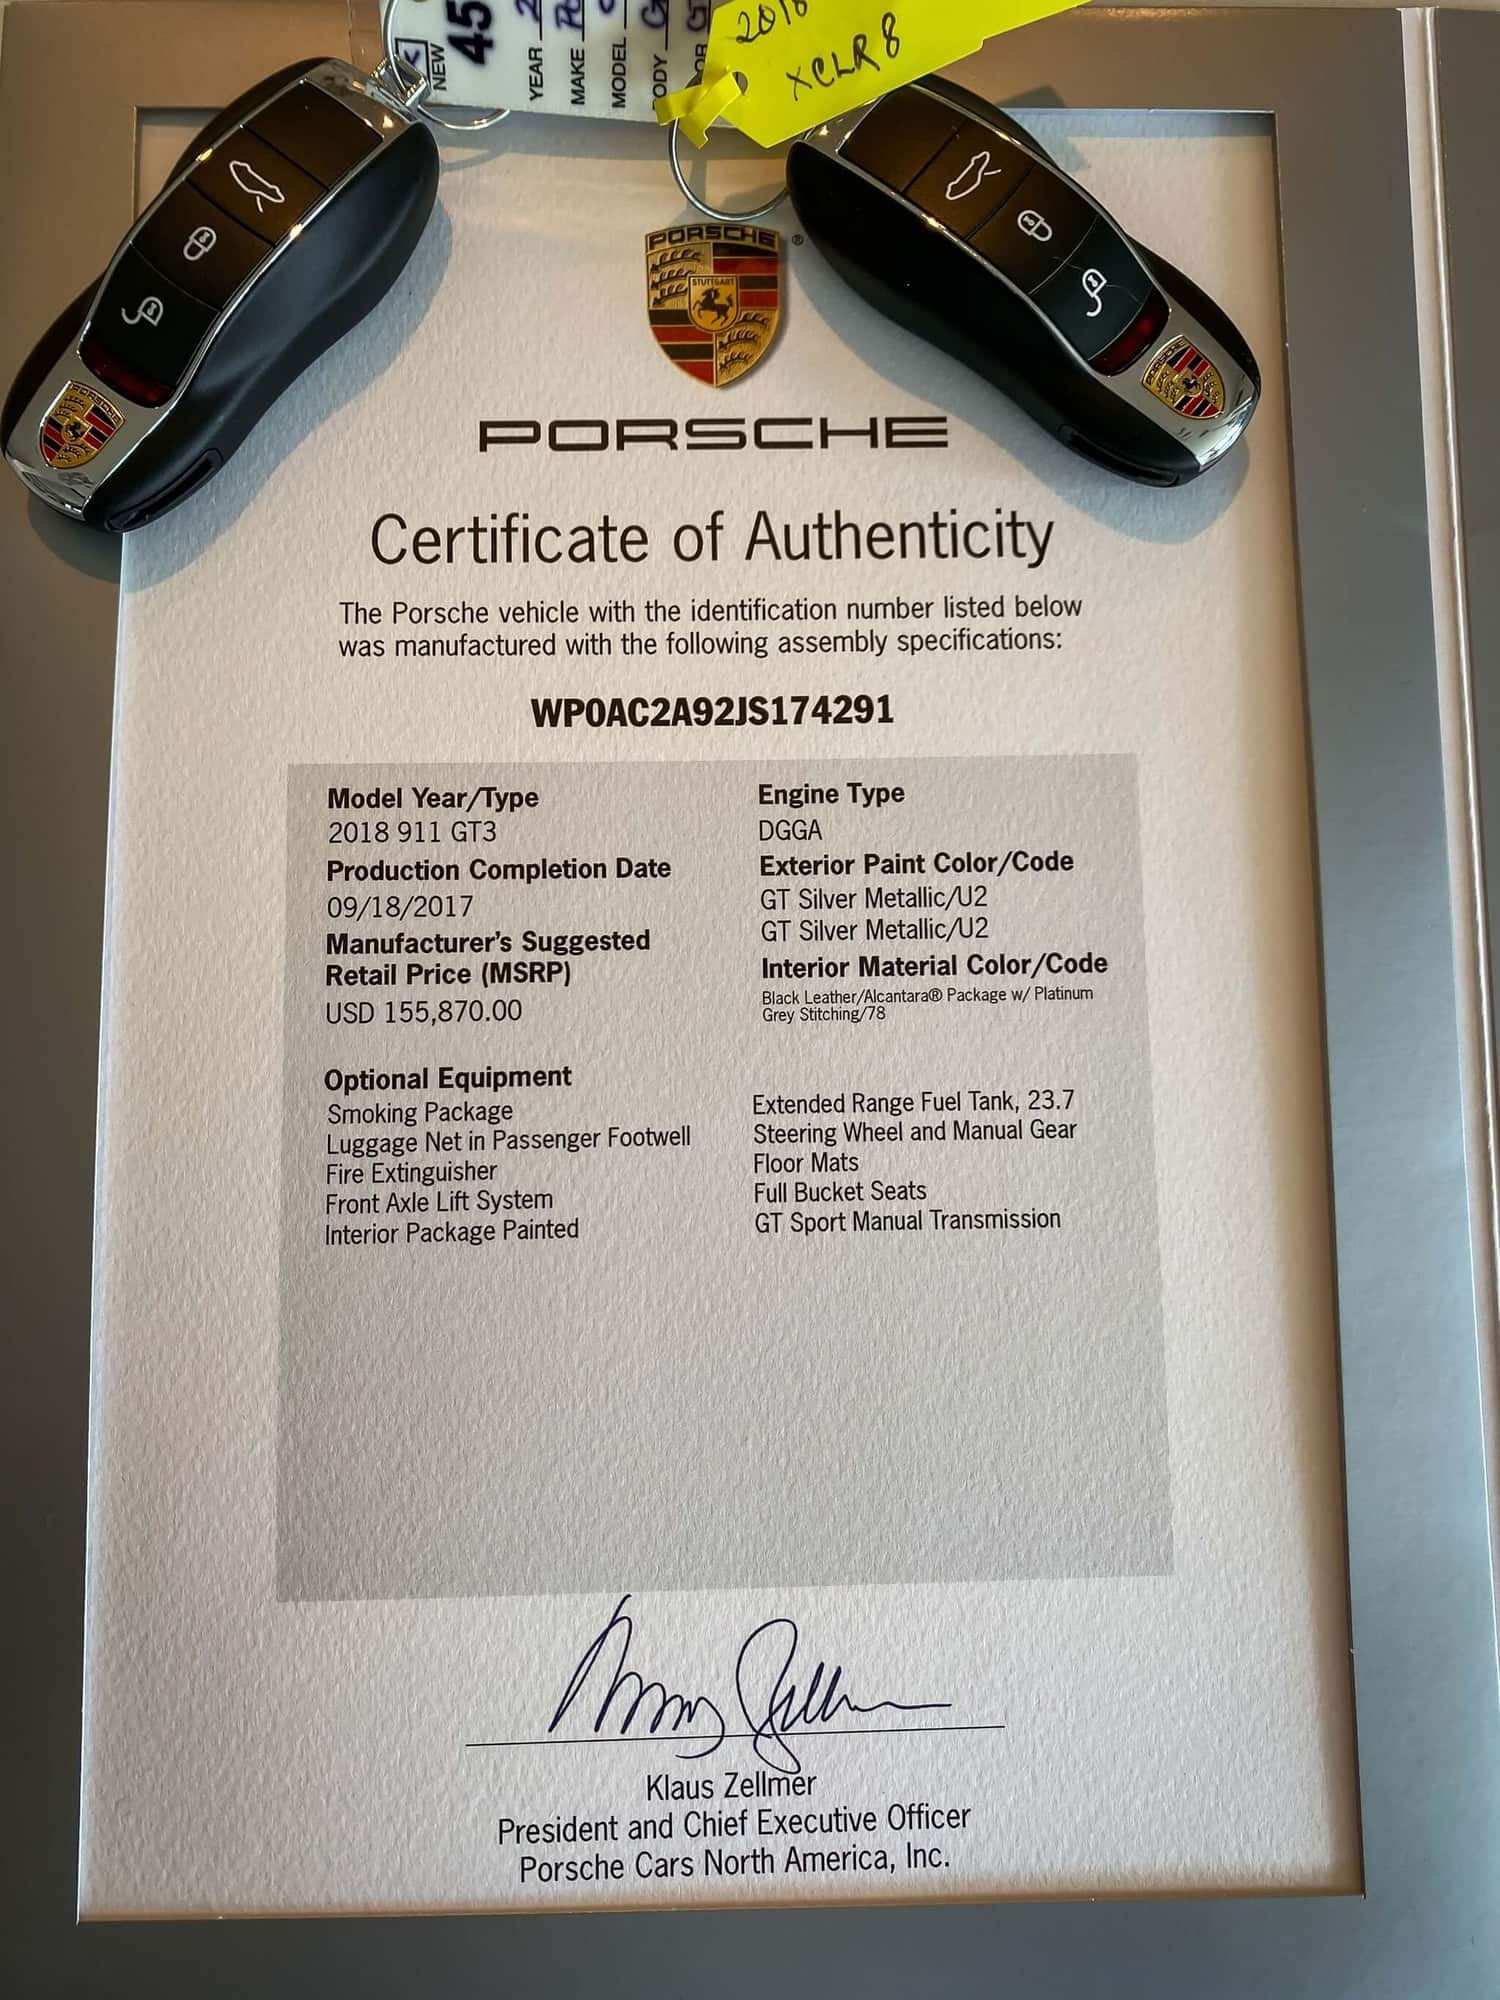 2018 Porsche GT3 - FS: 2018 Porsche GT3 (Manual, Buckets, FAL, etc) - Used - VIN WP0AC2A92JS174291 - 20,500 Miles - 6 cyl - 2WD - Manual - Coupe - Silver - Las Vegas, NV 89141, United States